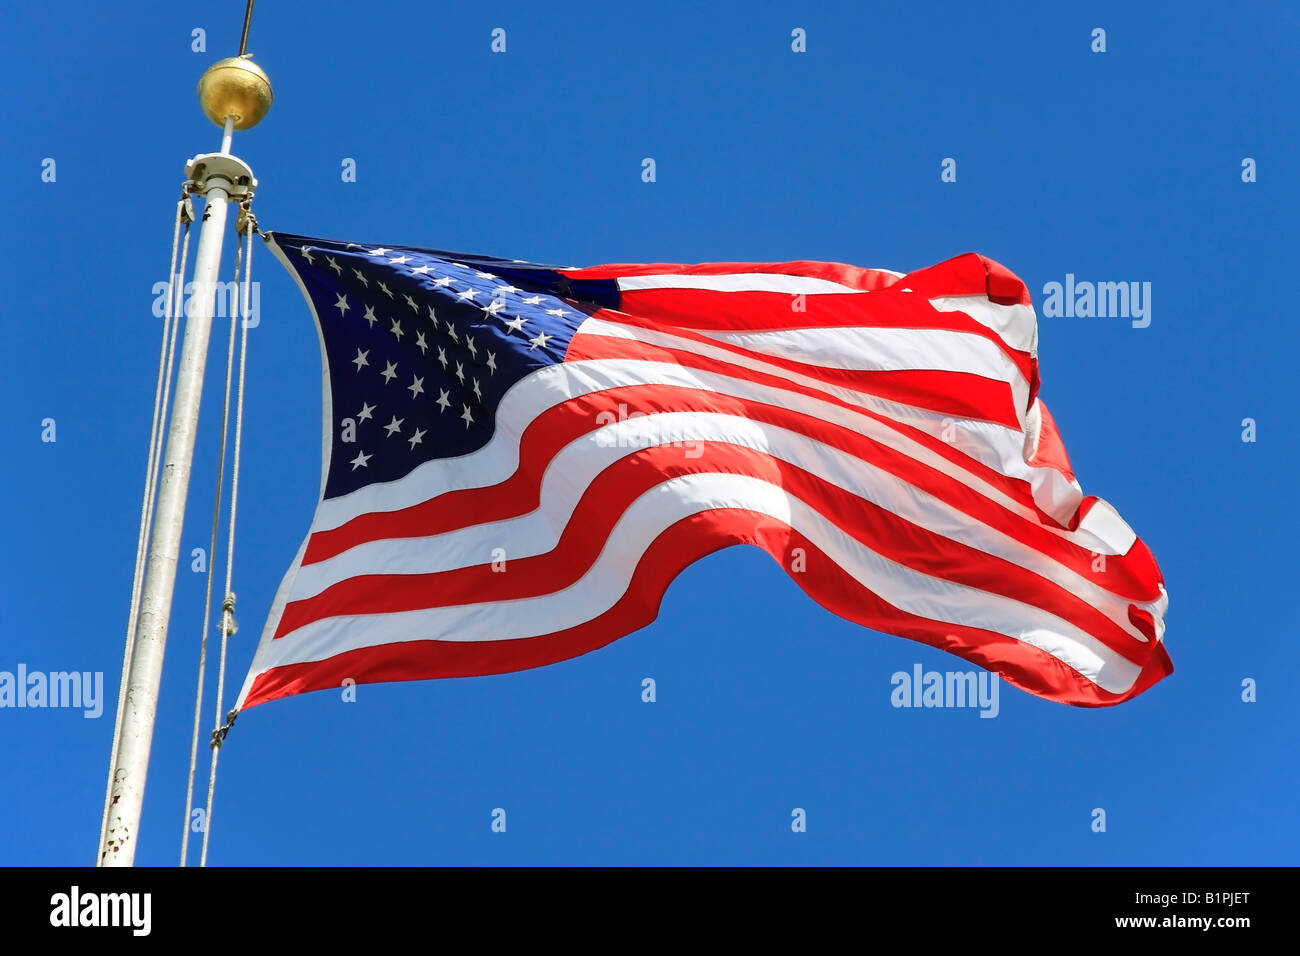 USA flag waving over a blue sky in Battery Park - New York City, USA Stock Photo